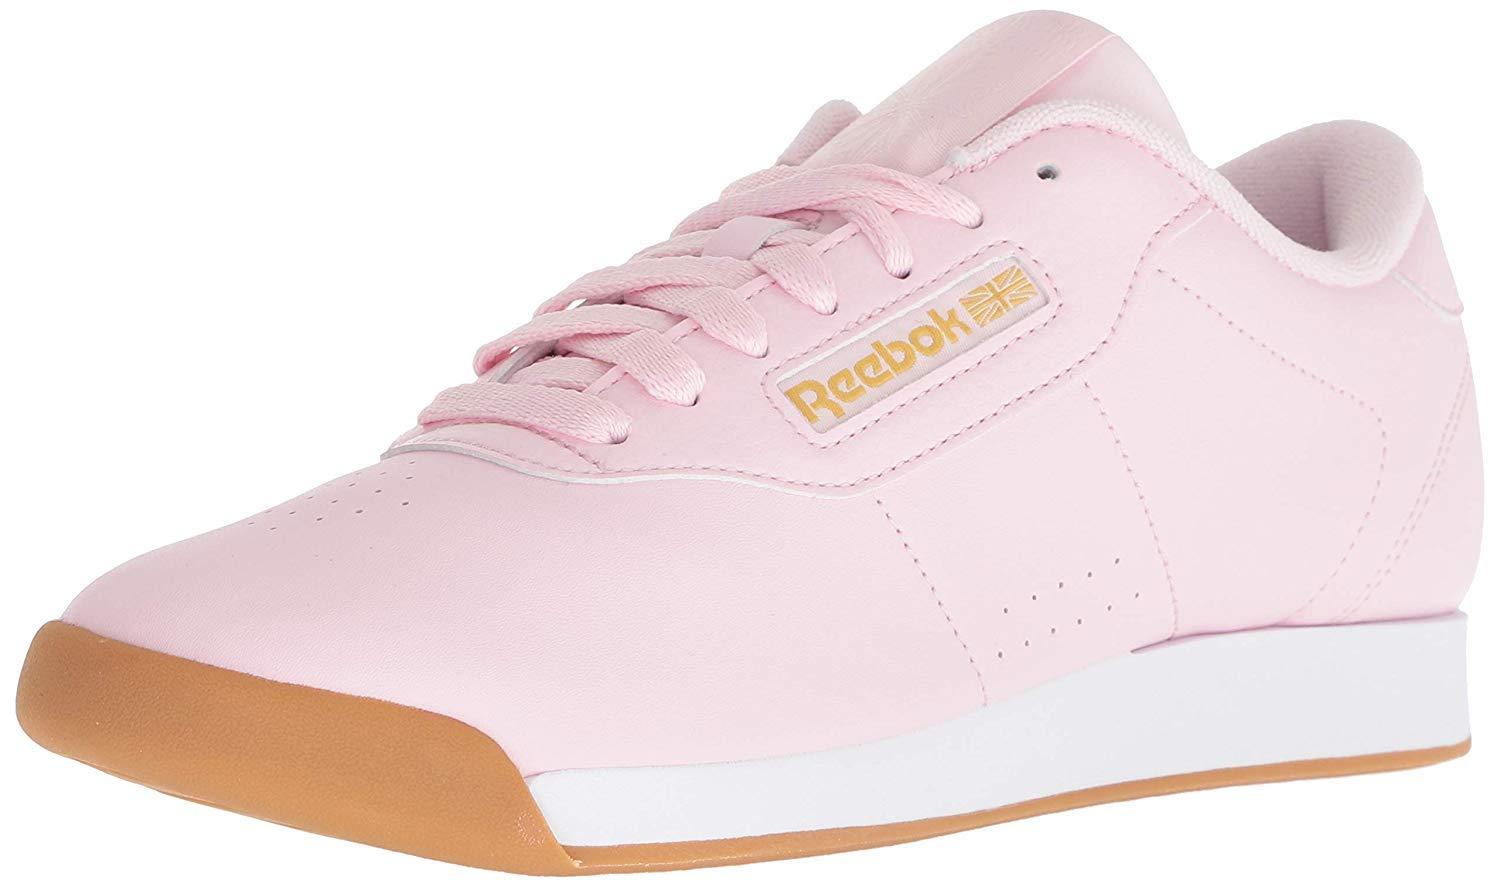 Reebok Synthetic Princess Sneaker in Pink/White/Gold Metallic (Pink) - Save  55% | Lyst